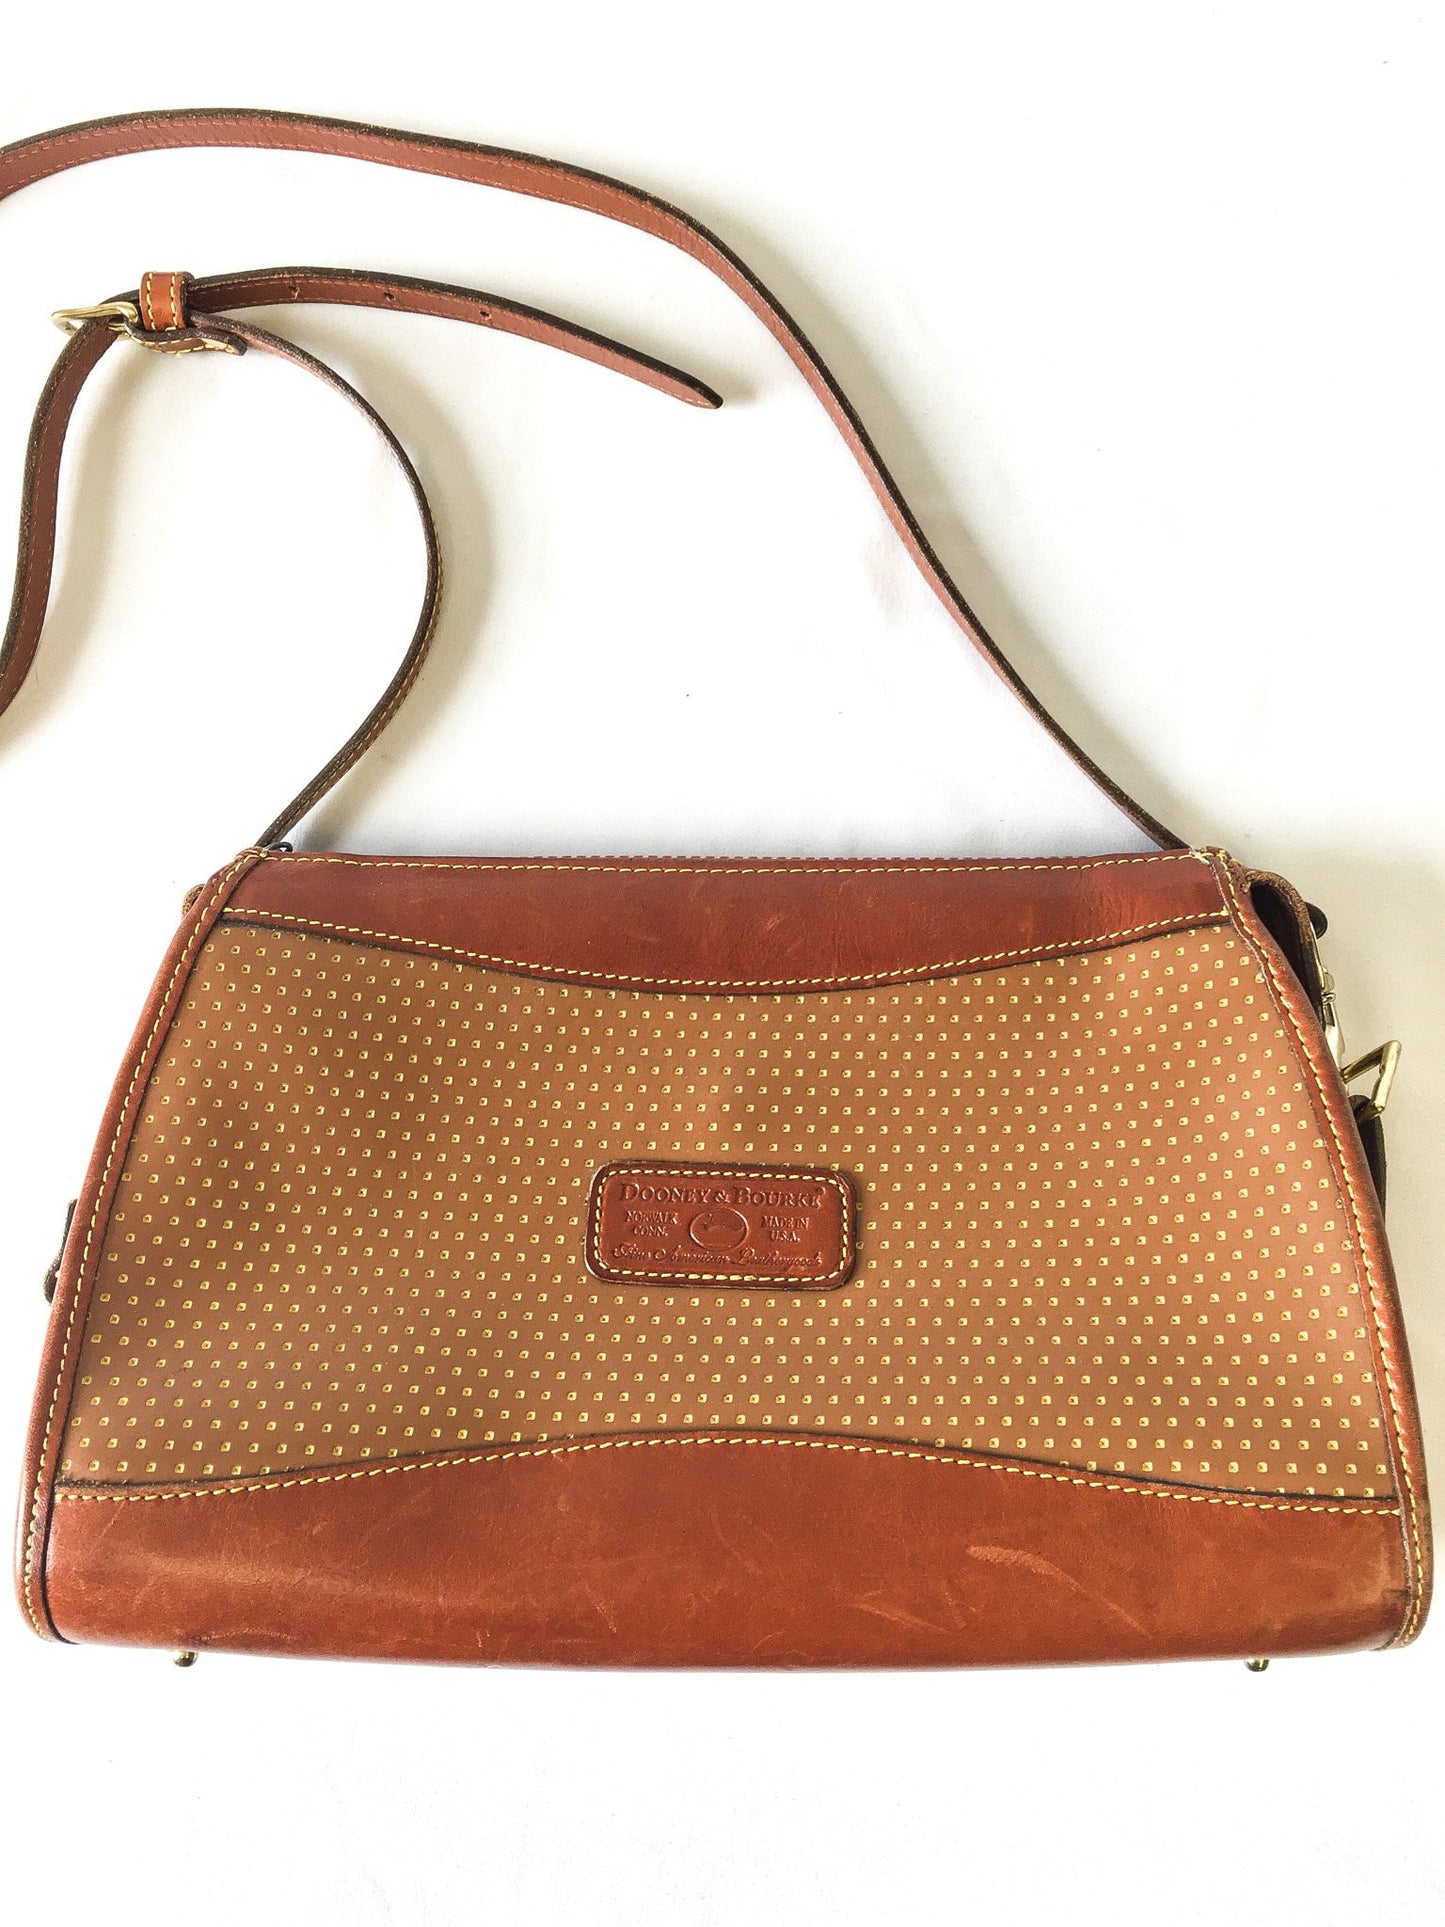 Vintage 90s Dooney and Bourke Two-Toned Brown Leather Crossbody, 90s Dooney and Bourke Handbag